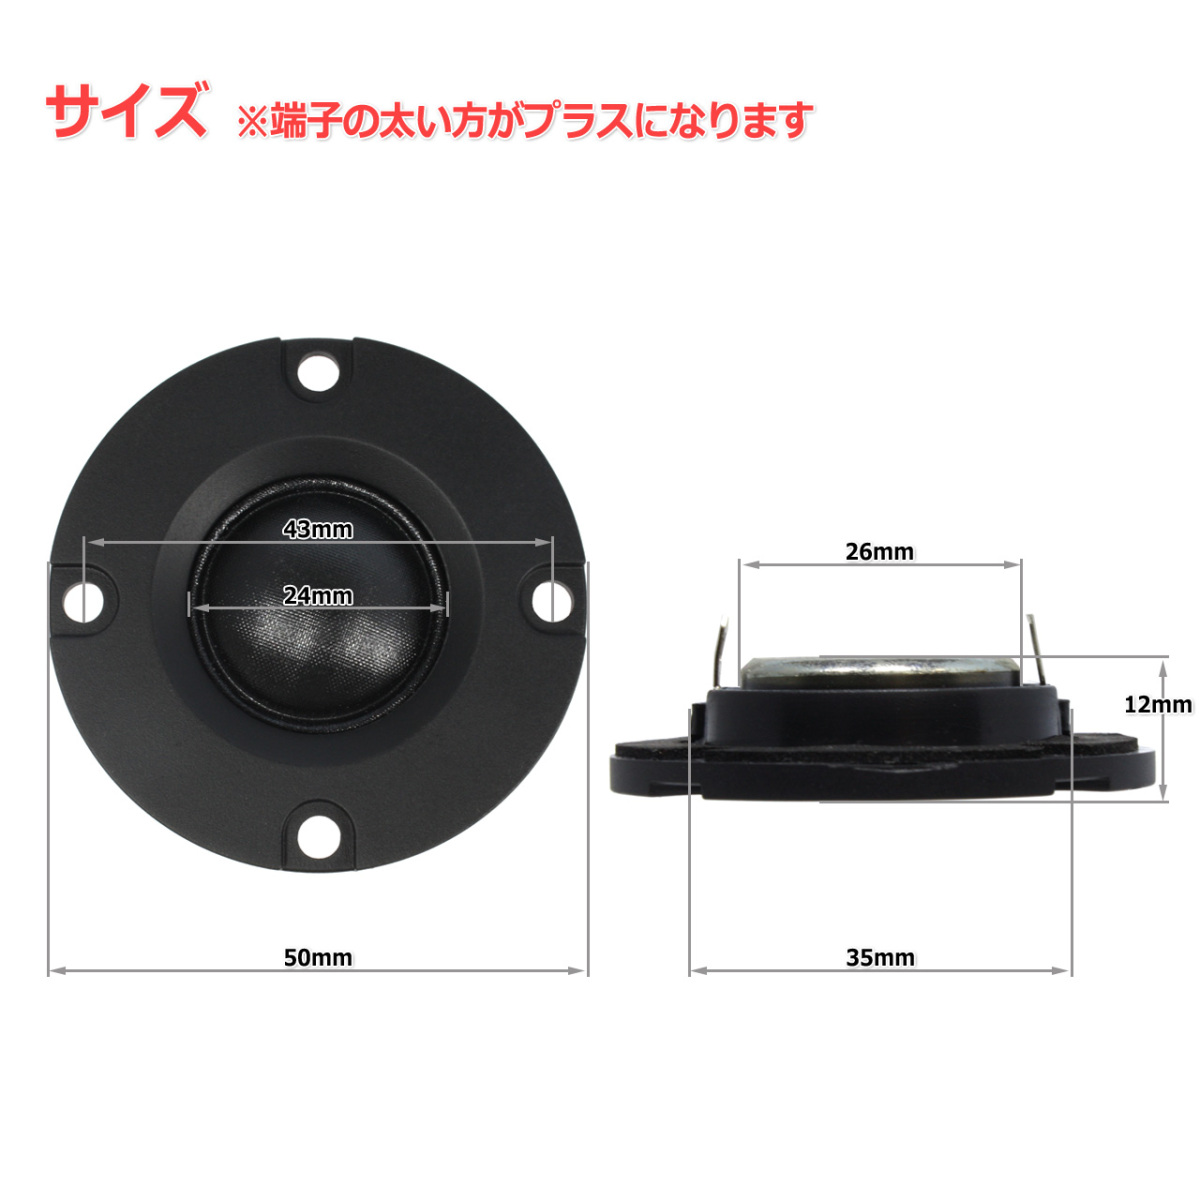 4 hole bezel attaching fero fluid system silk dome tweeter unit 1 -inch (24mm) 8Ω/MAX30W[ speaker original work /DIY audio ]